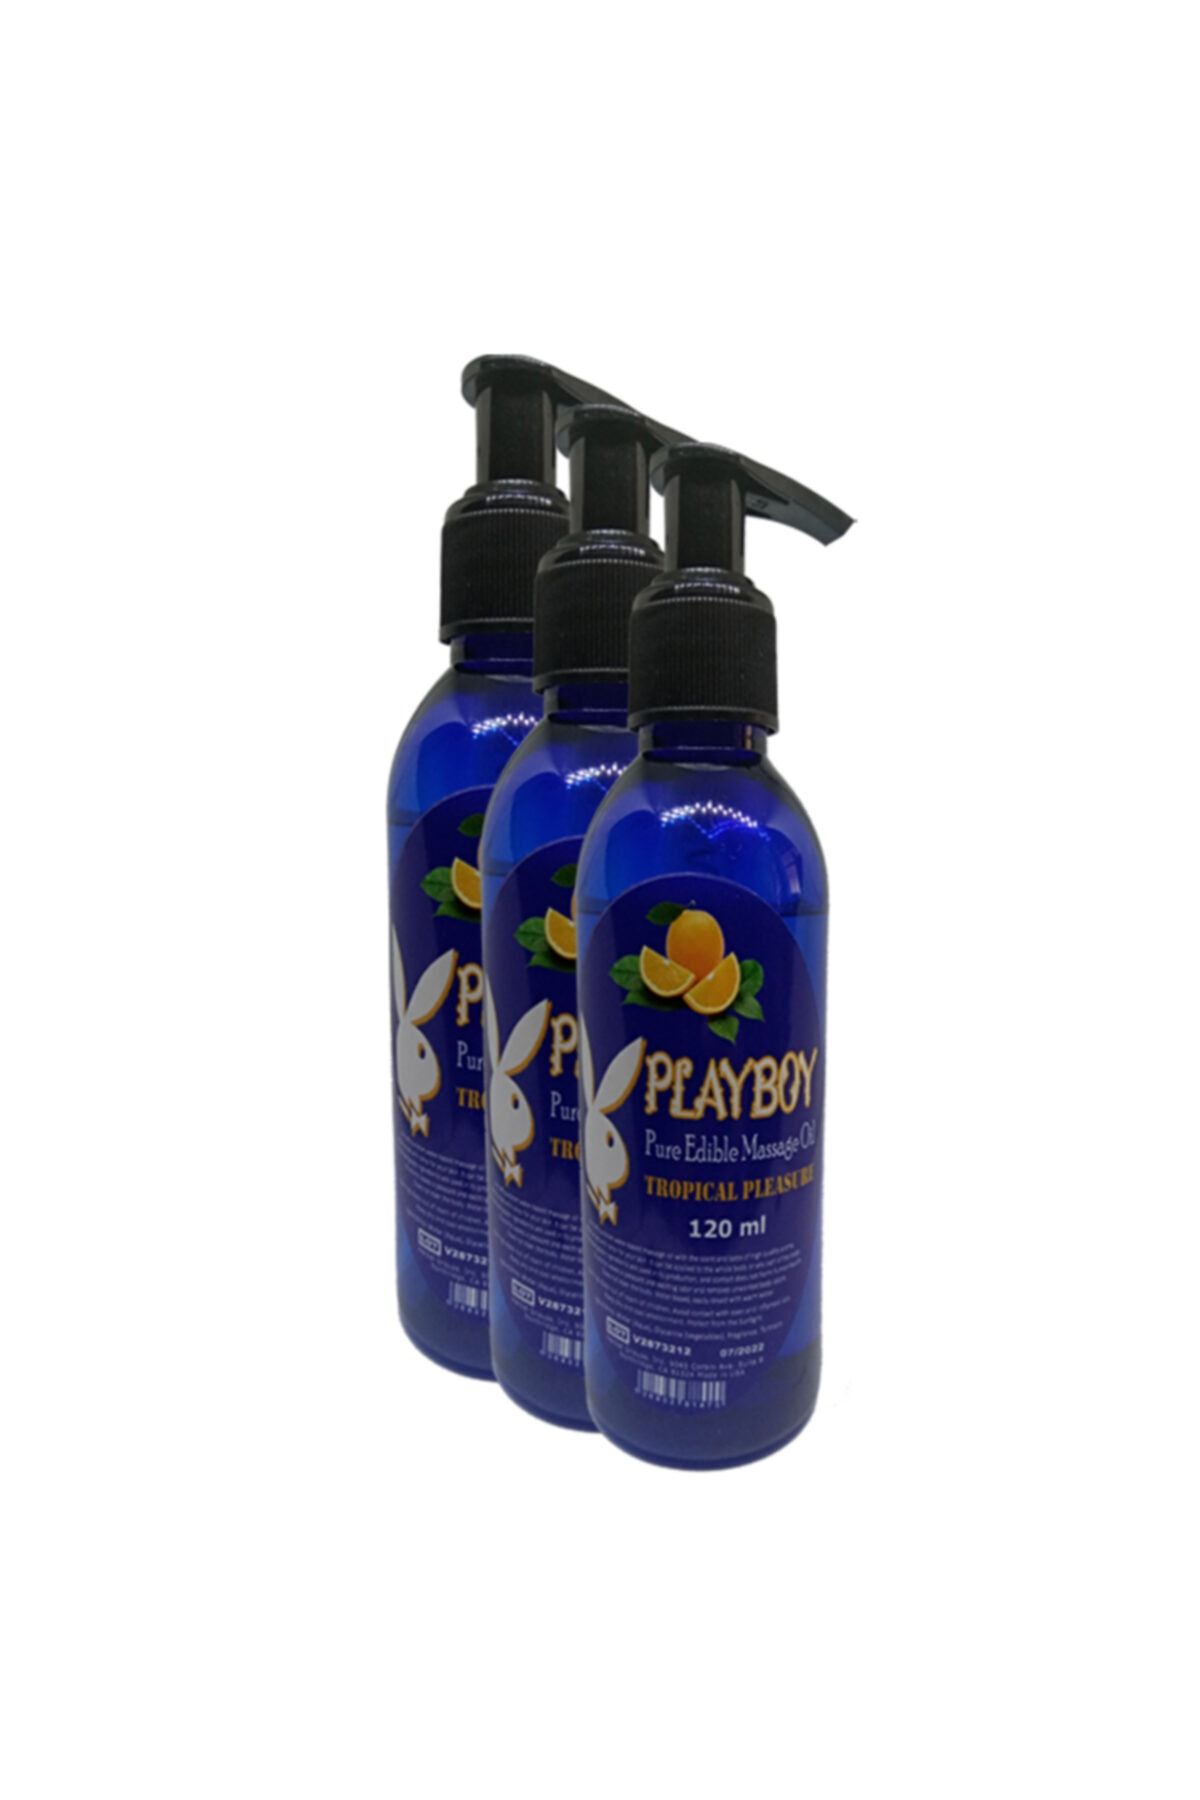 Playboy Pure Edible Massage Oil 120ml Portakal Aromalı Masaj Yağı 3 Adet